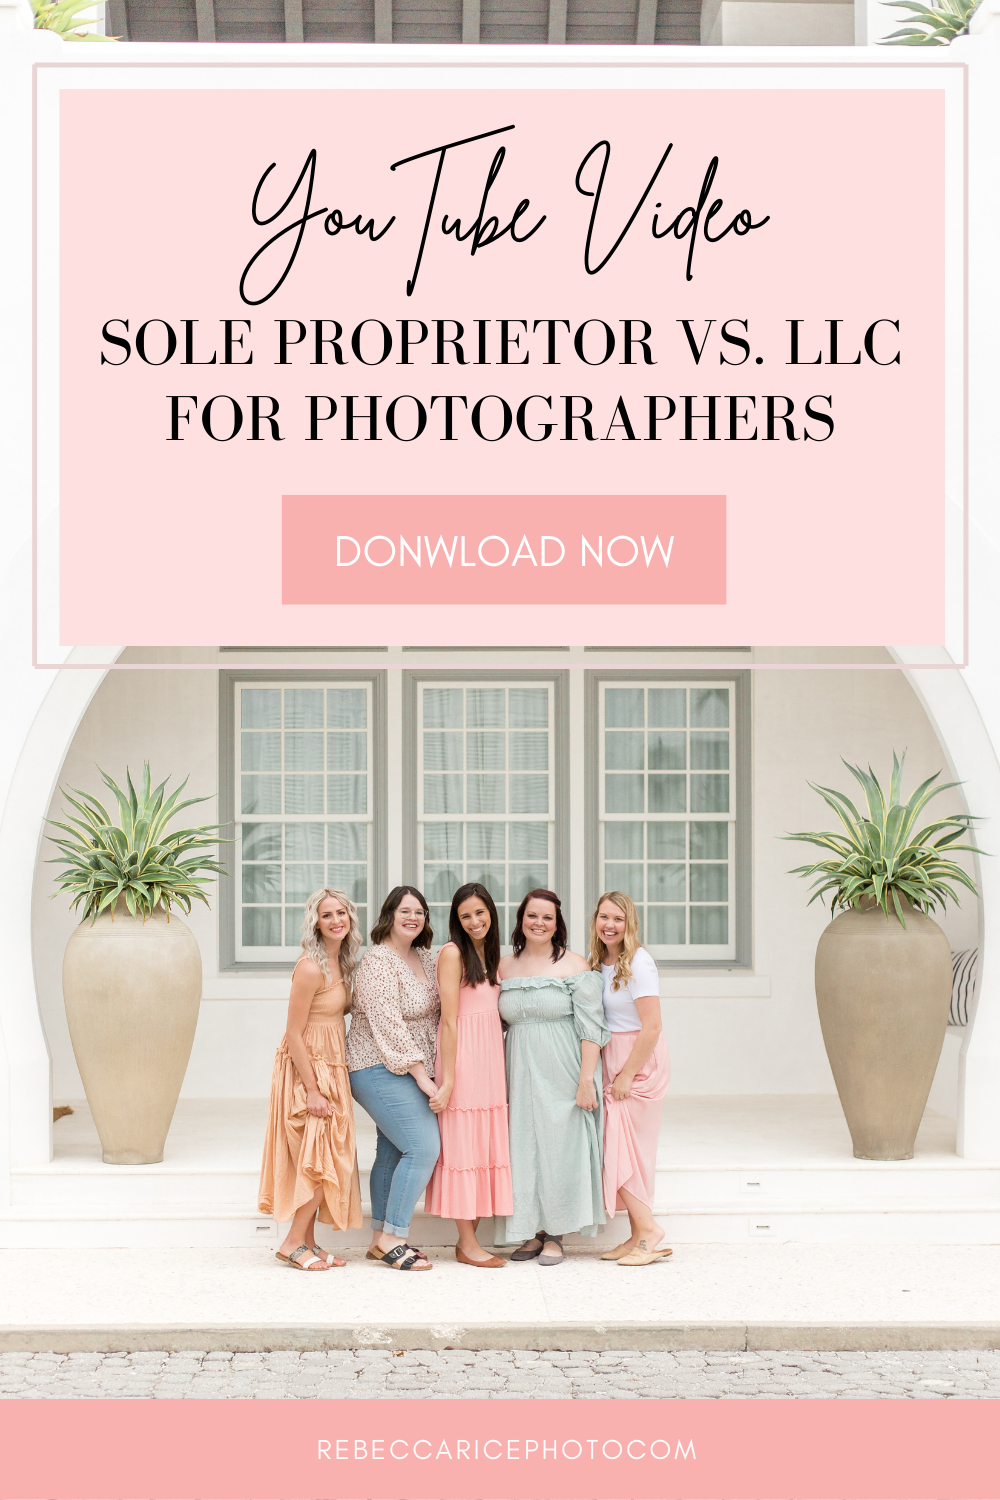 Sole Proprietor vs. LLC for Photographers